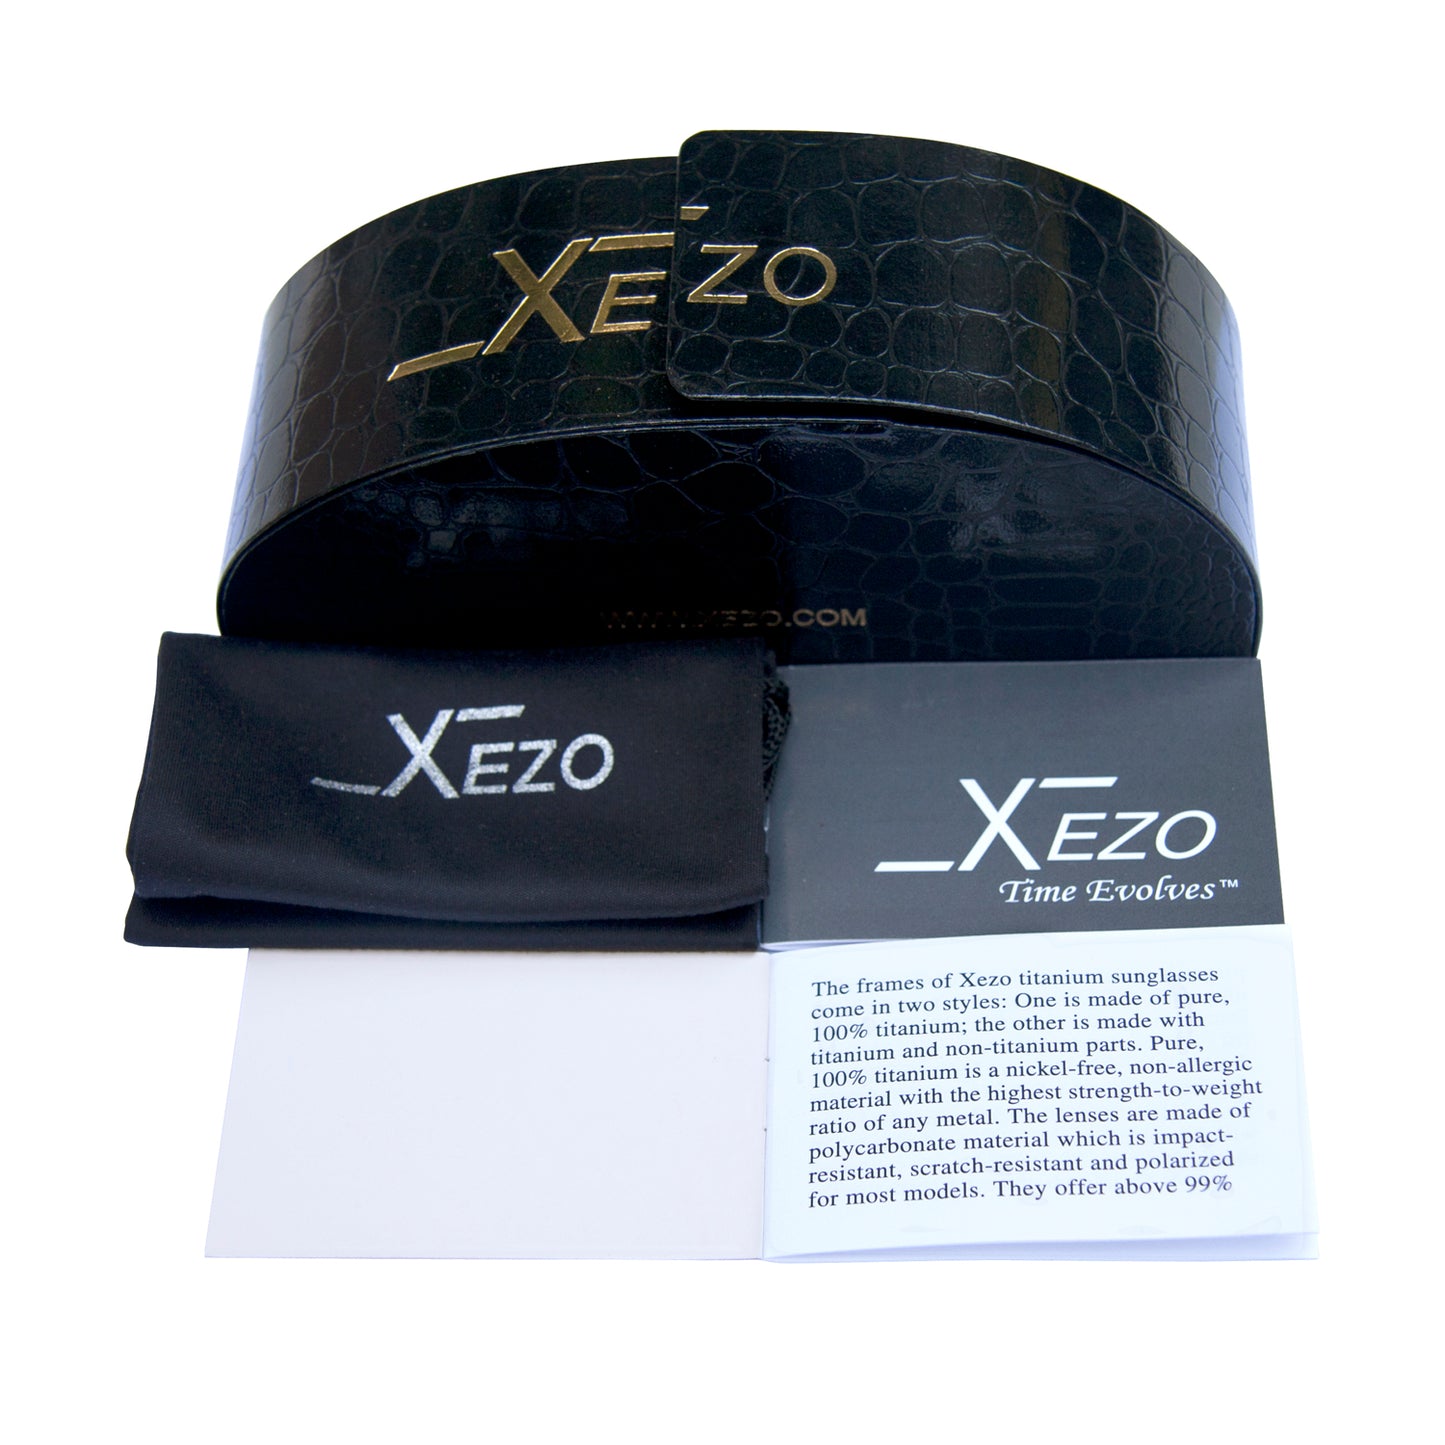 Xezo - Black gift box, black bag, and certificate of the Airman 2002 G sunglasses